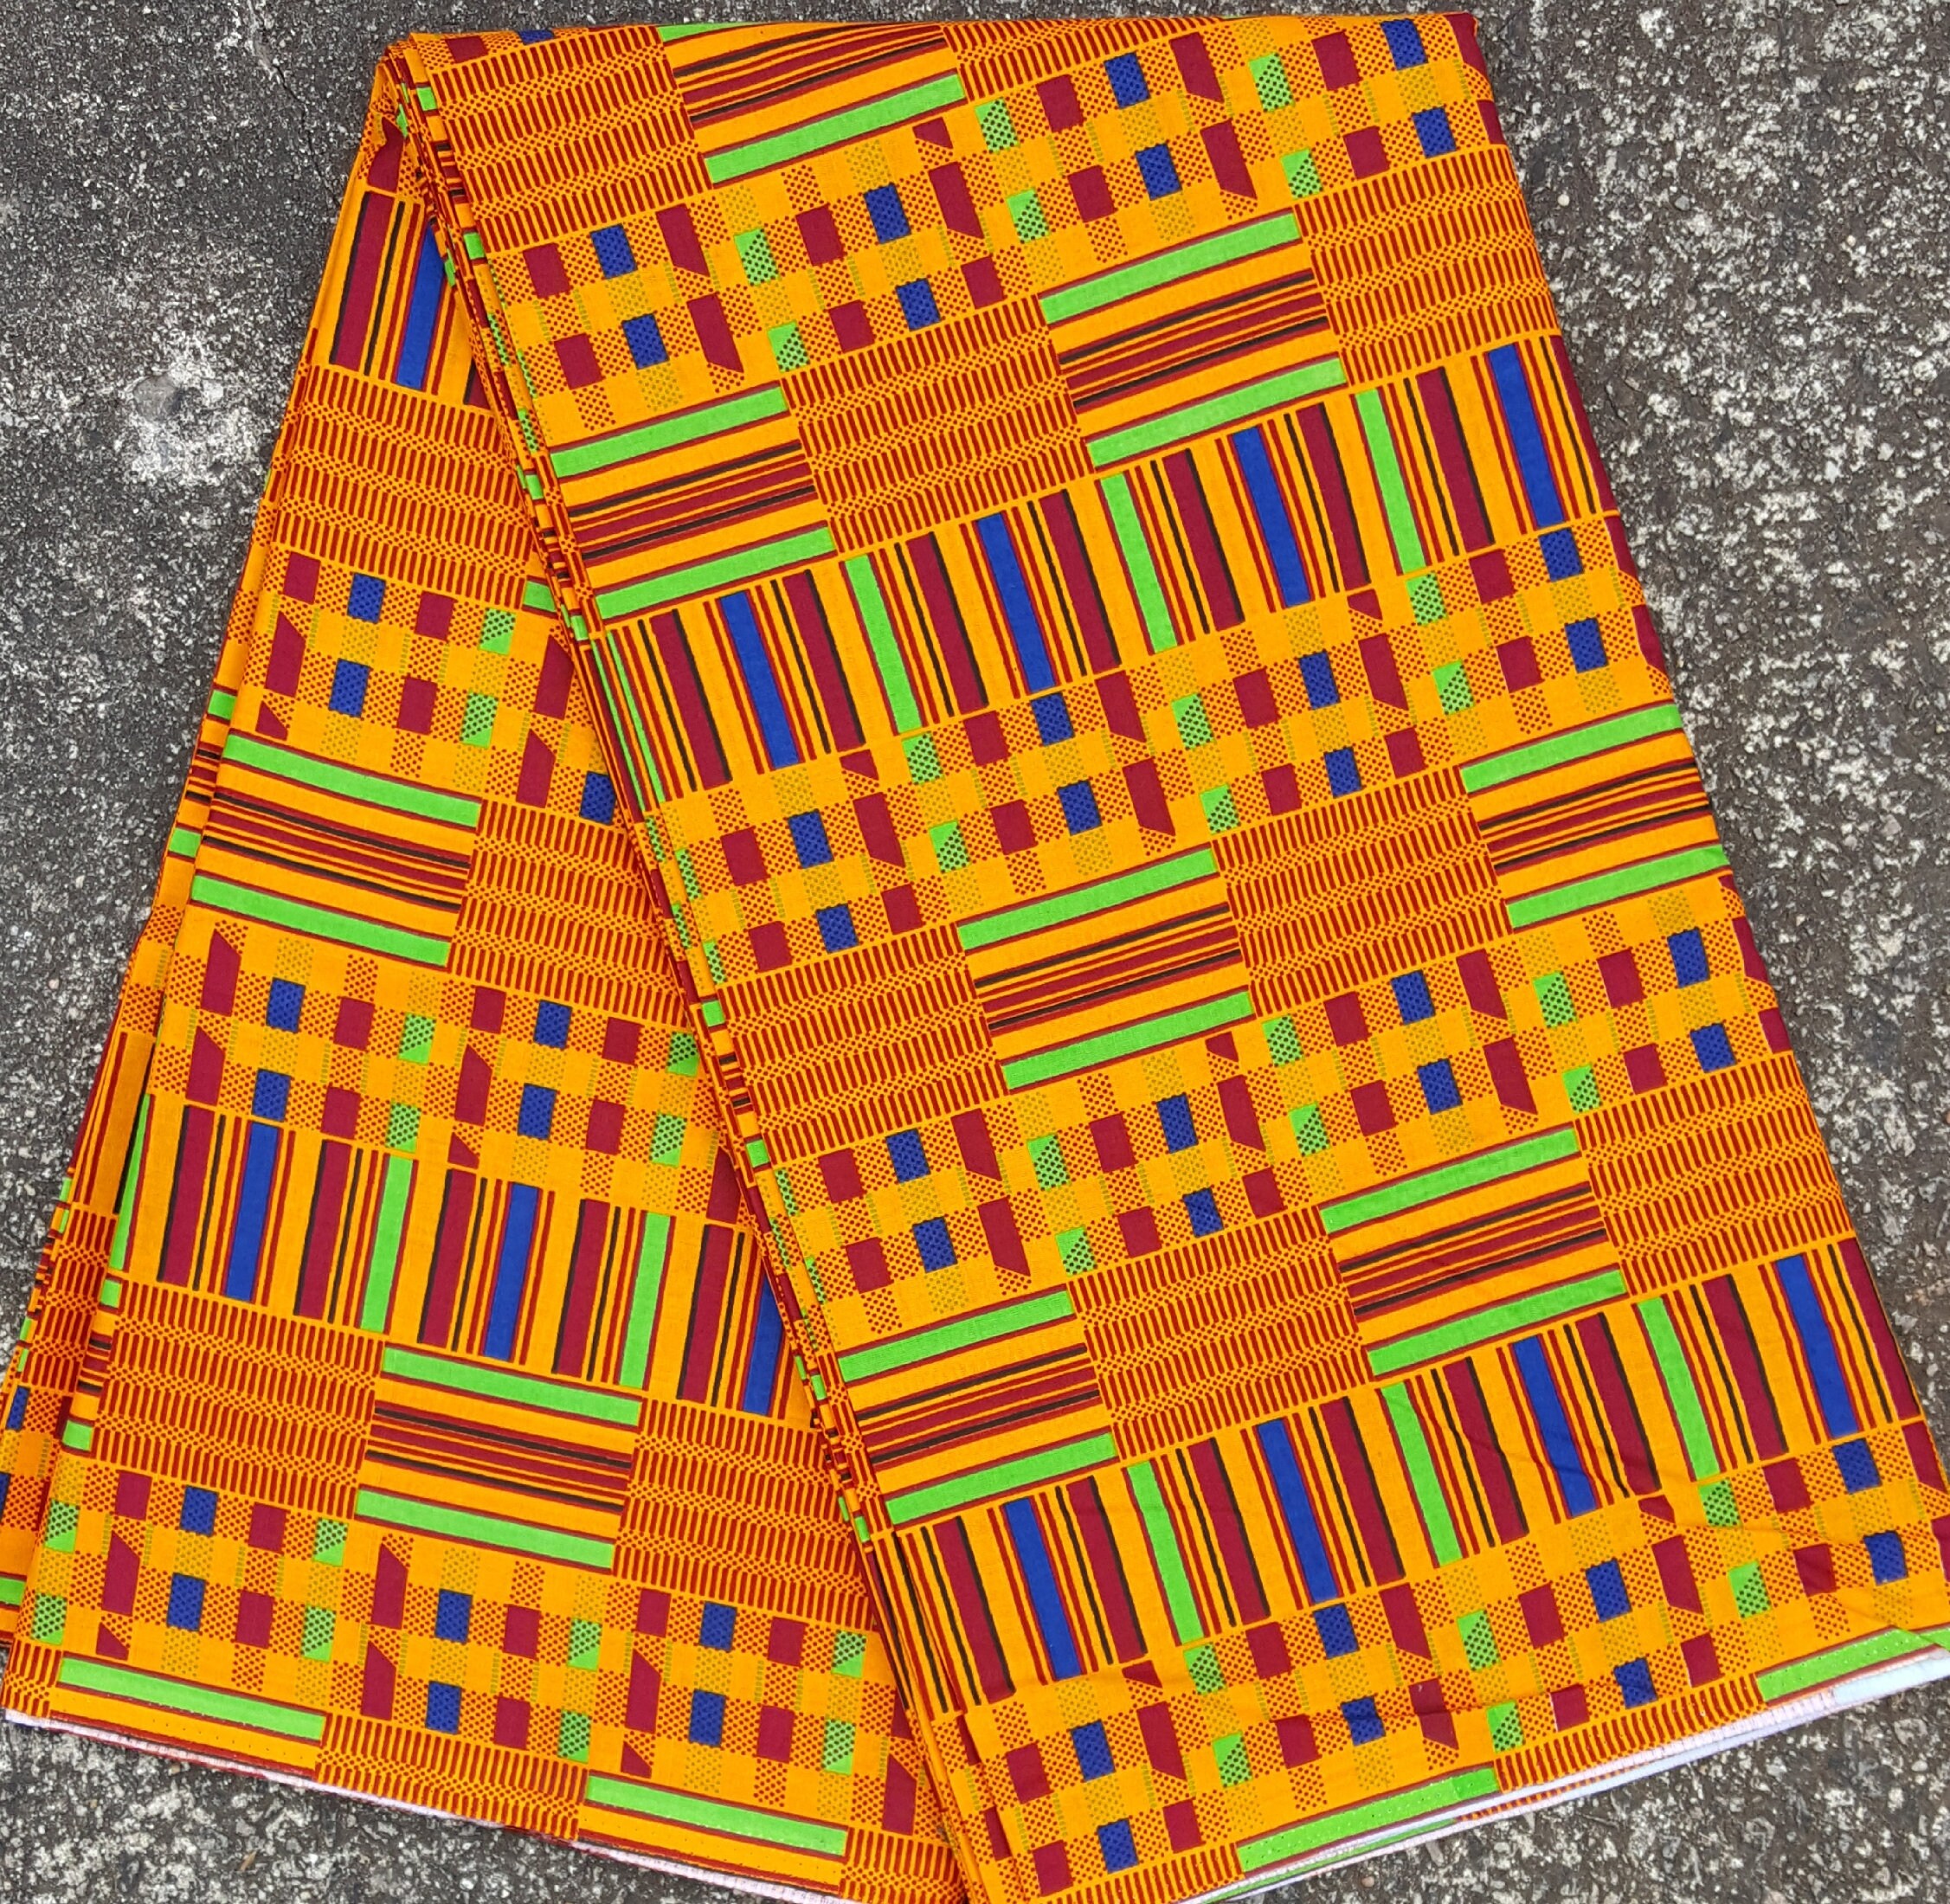 MEFRI GHANA KENTE CLOTH AND FASHION DESIGNS